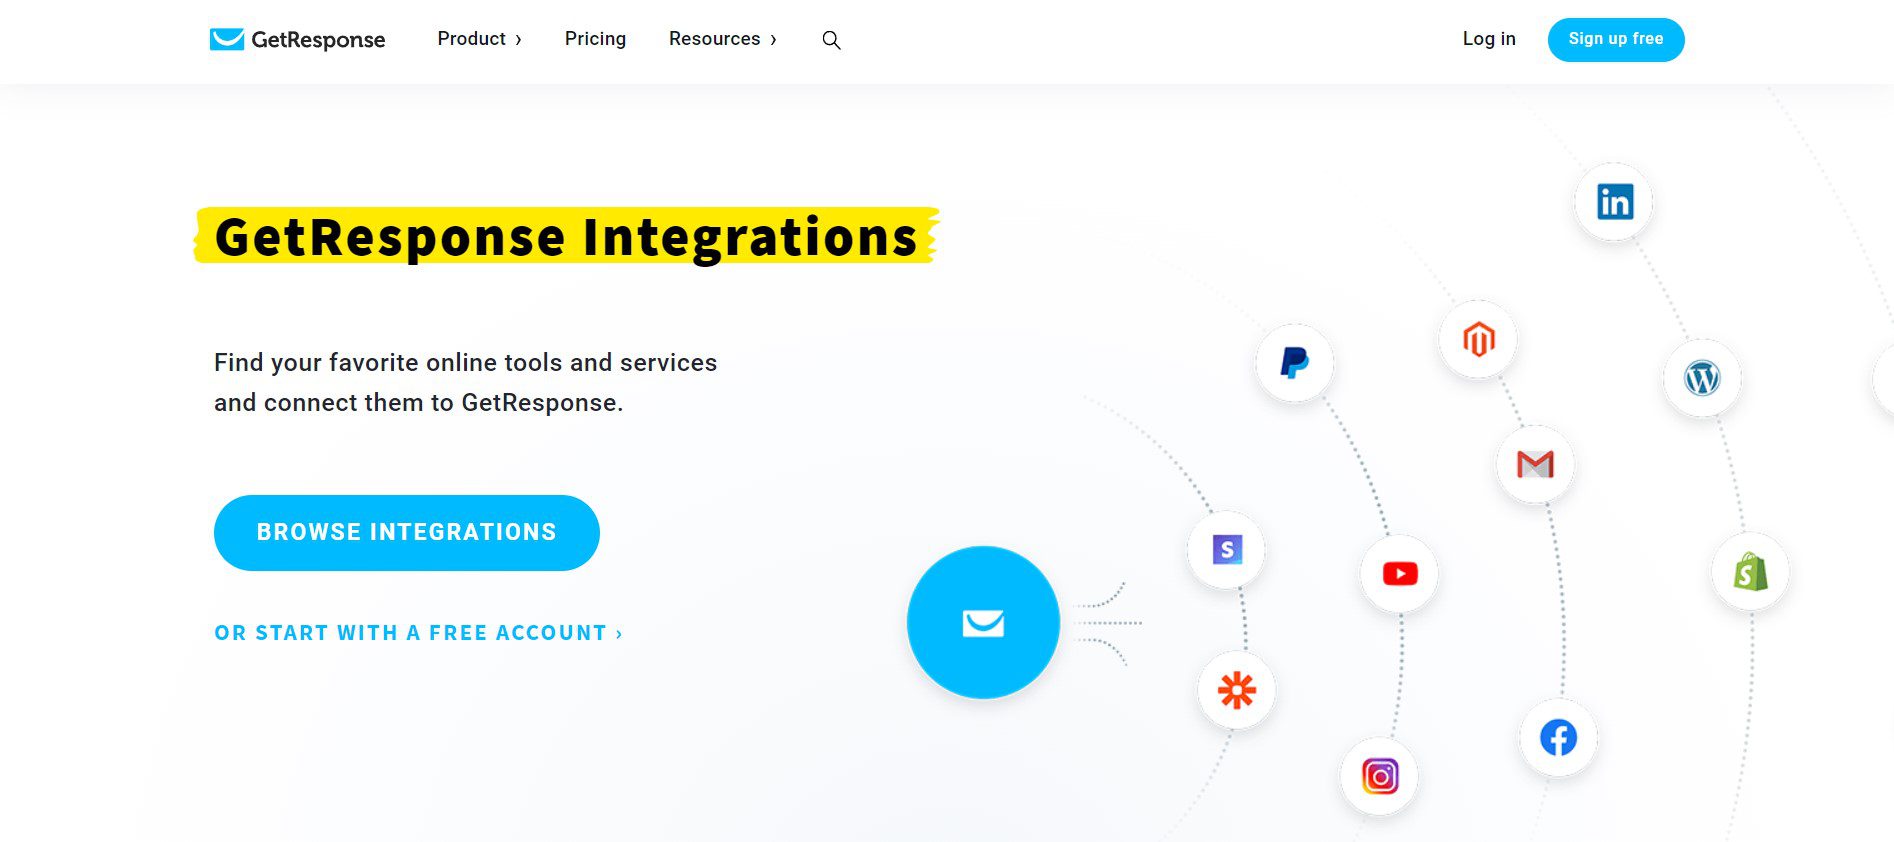 GetResponse Integrations Page January 2023